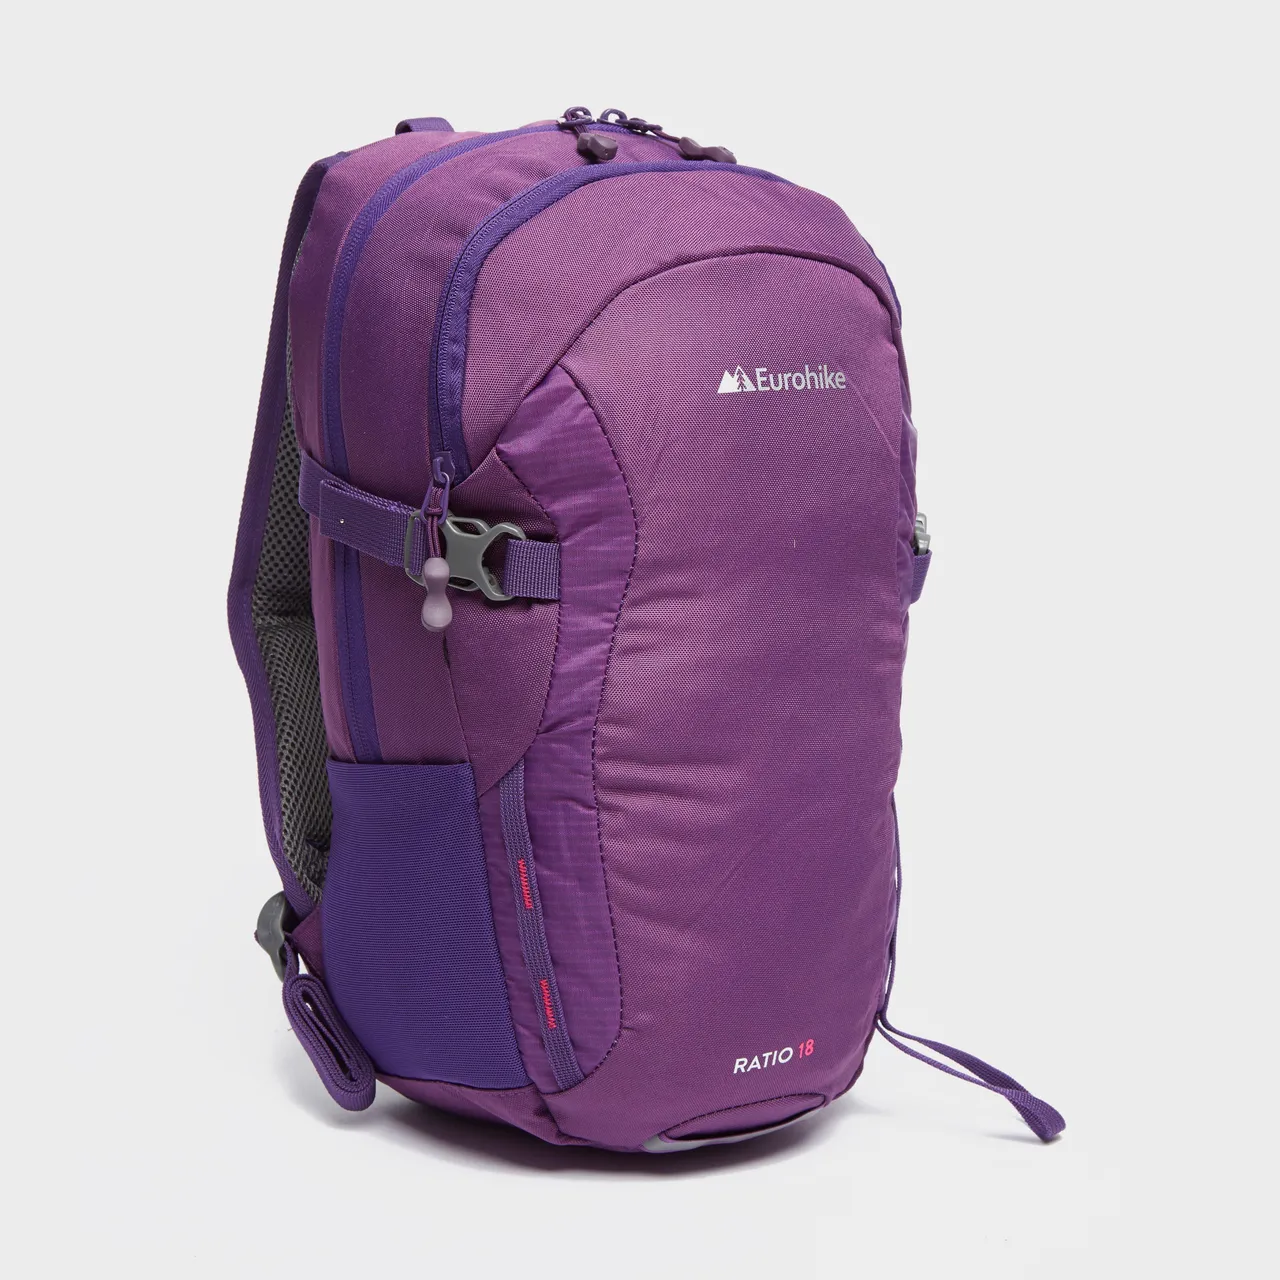 Ratio 18 Daypack, Purple